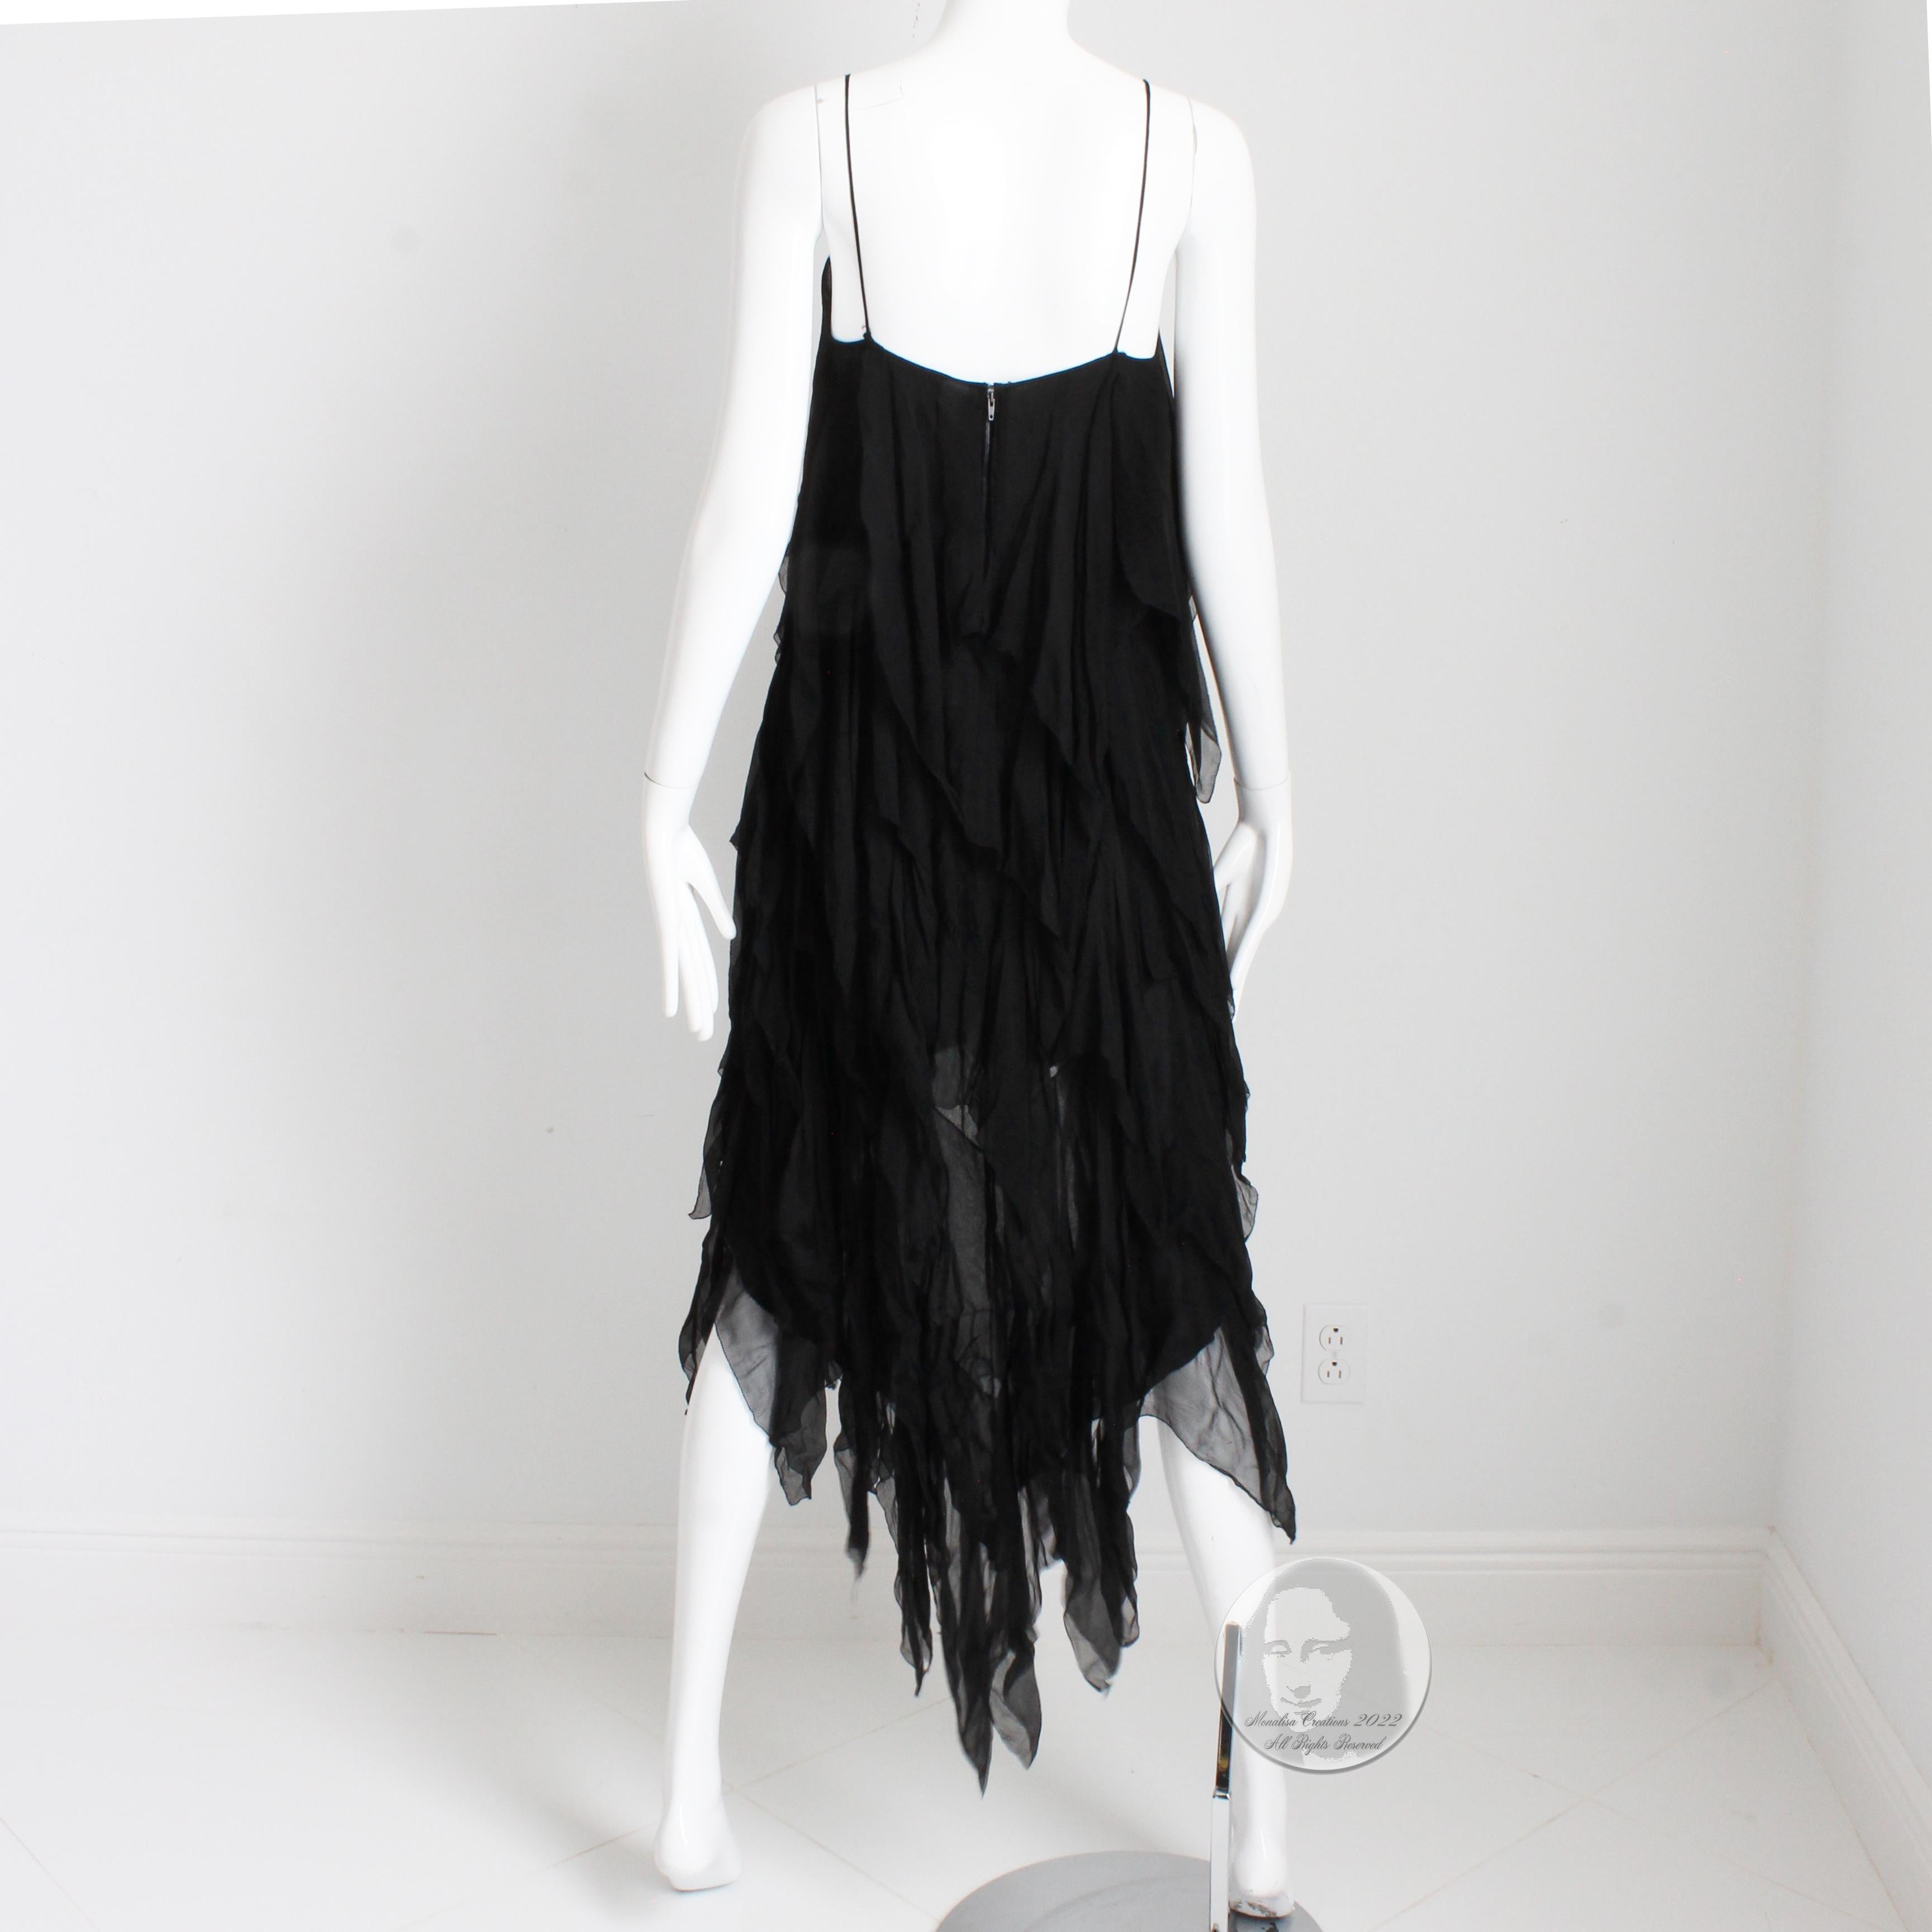 Chanel Dress Black Silk Chiffon Panels Layers LBD Flapper Style Rare 70s  4